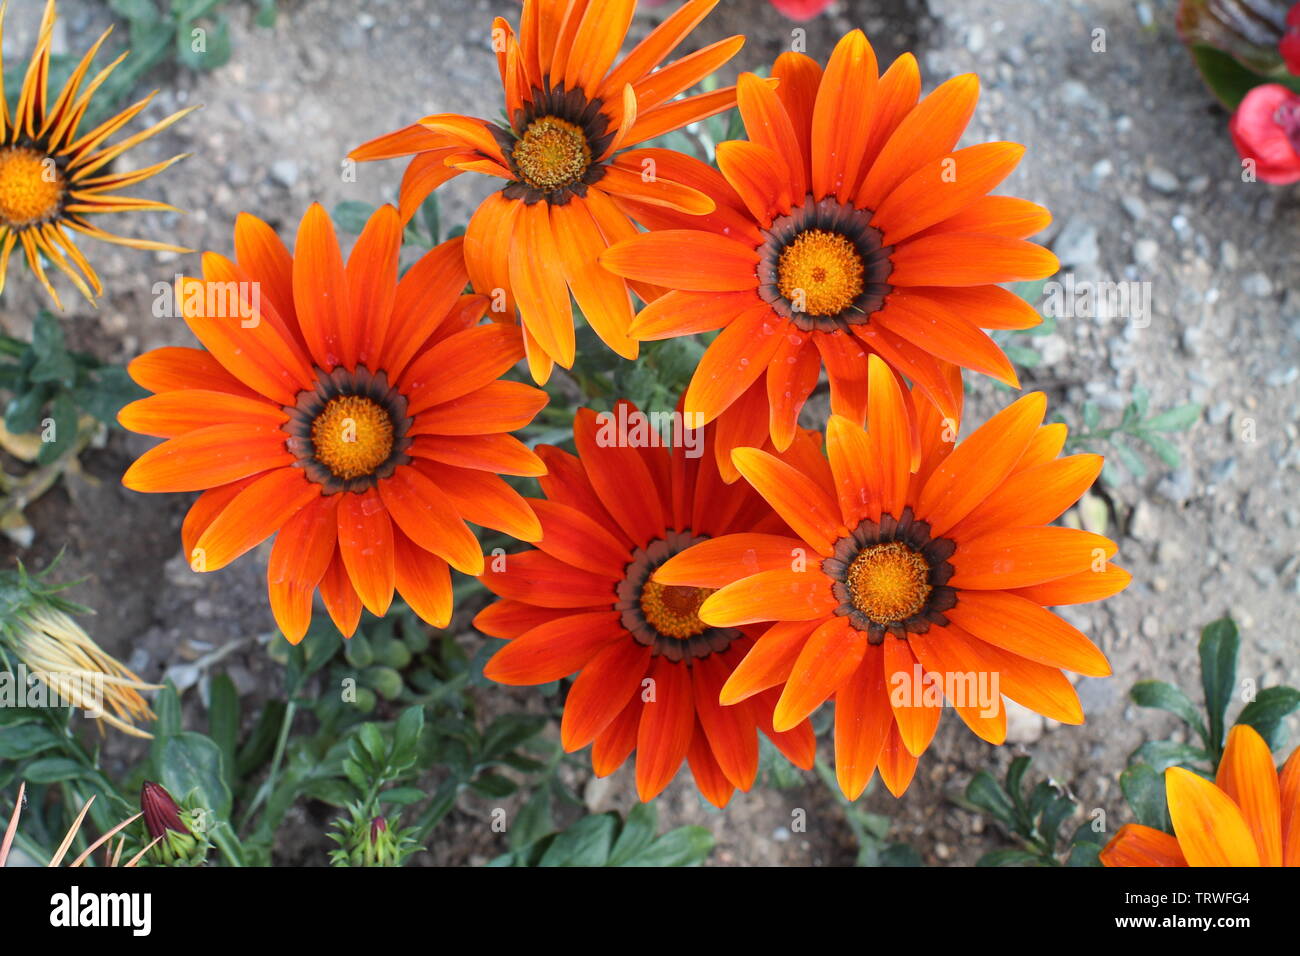 Helles orange gazania Blumen von oben Stockfotografie - Alamy